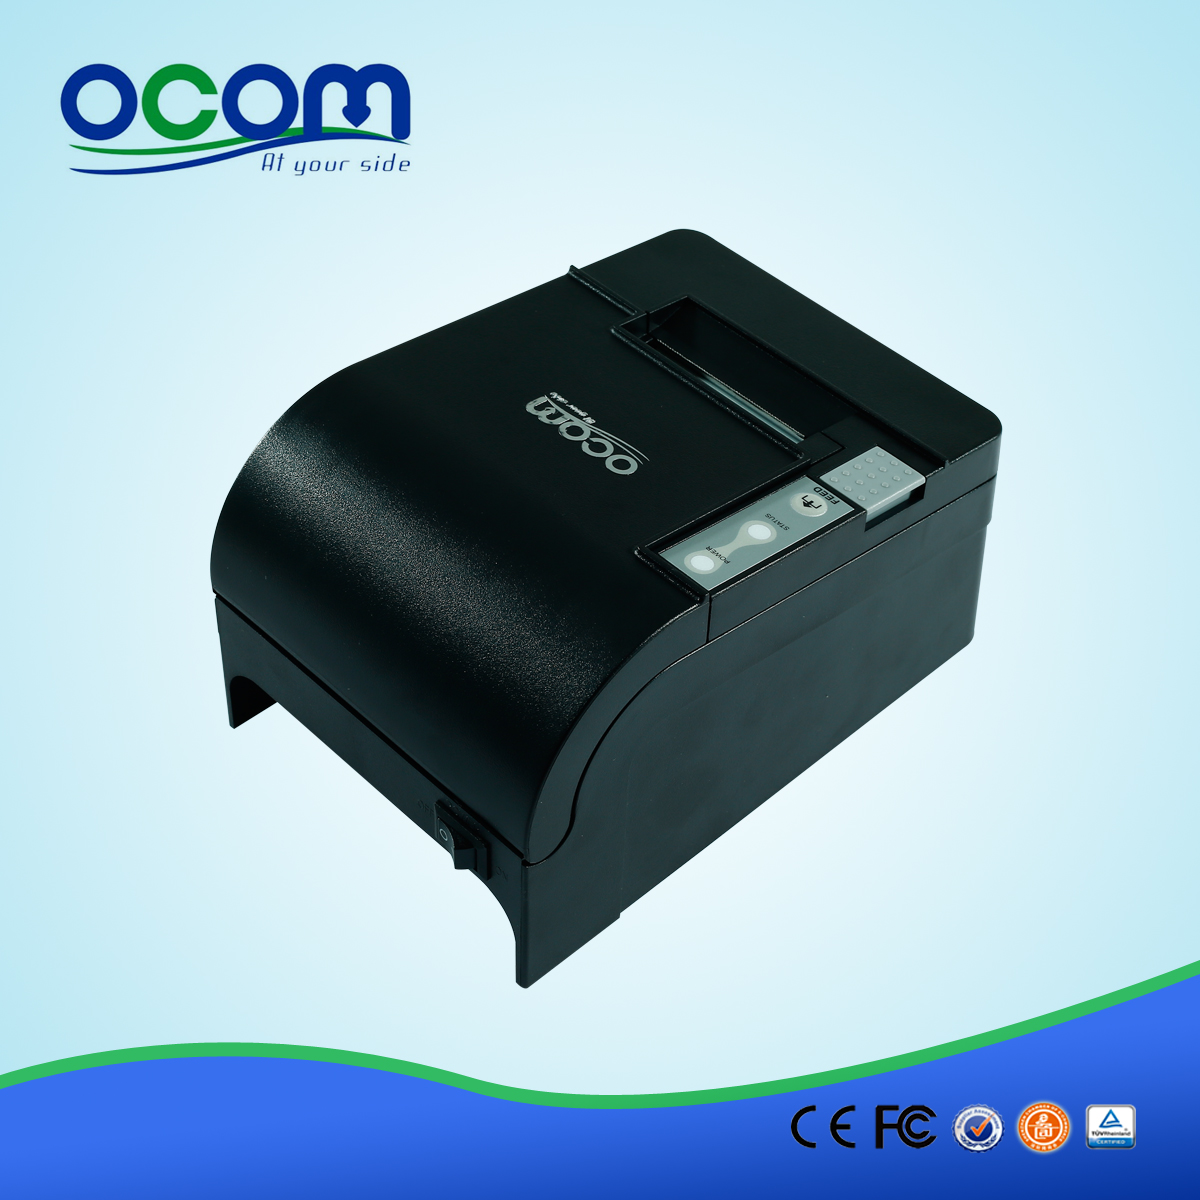 OCPP-58C 58 millimetri ricevuta economico stampante termica